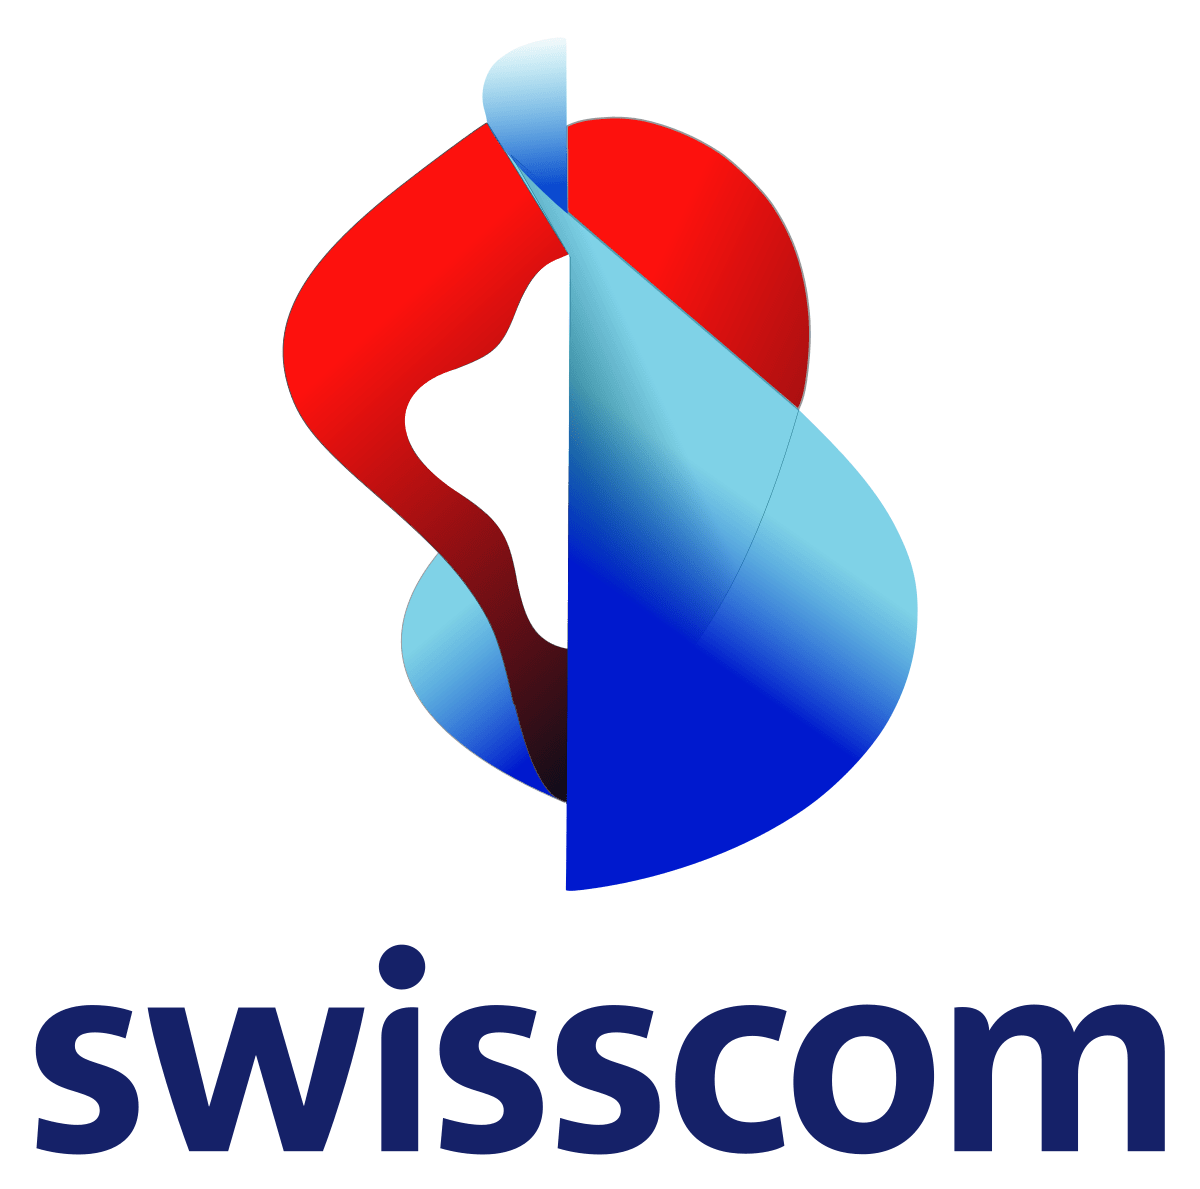 Swisscom Geschenk (Nur für Kunden) (Evtl. personalisiert)